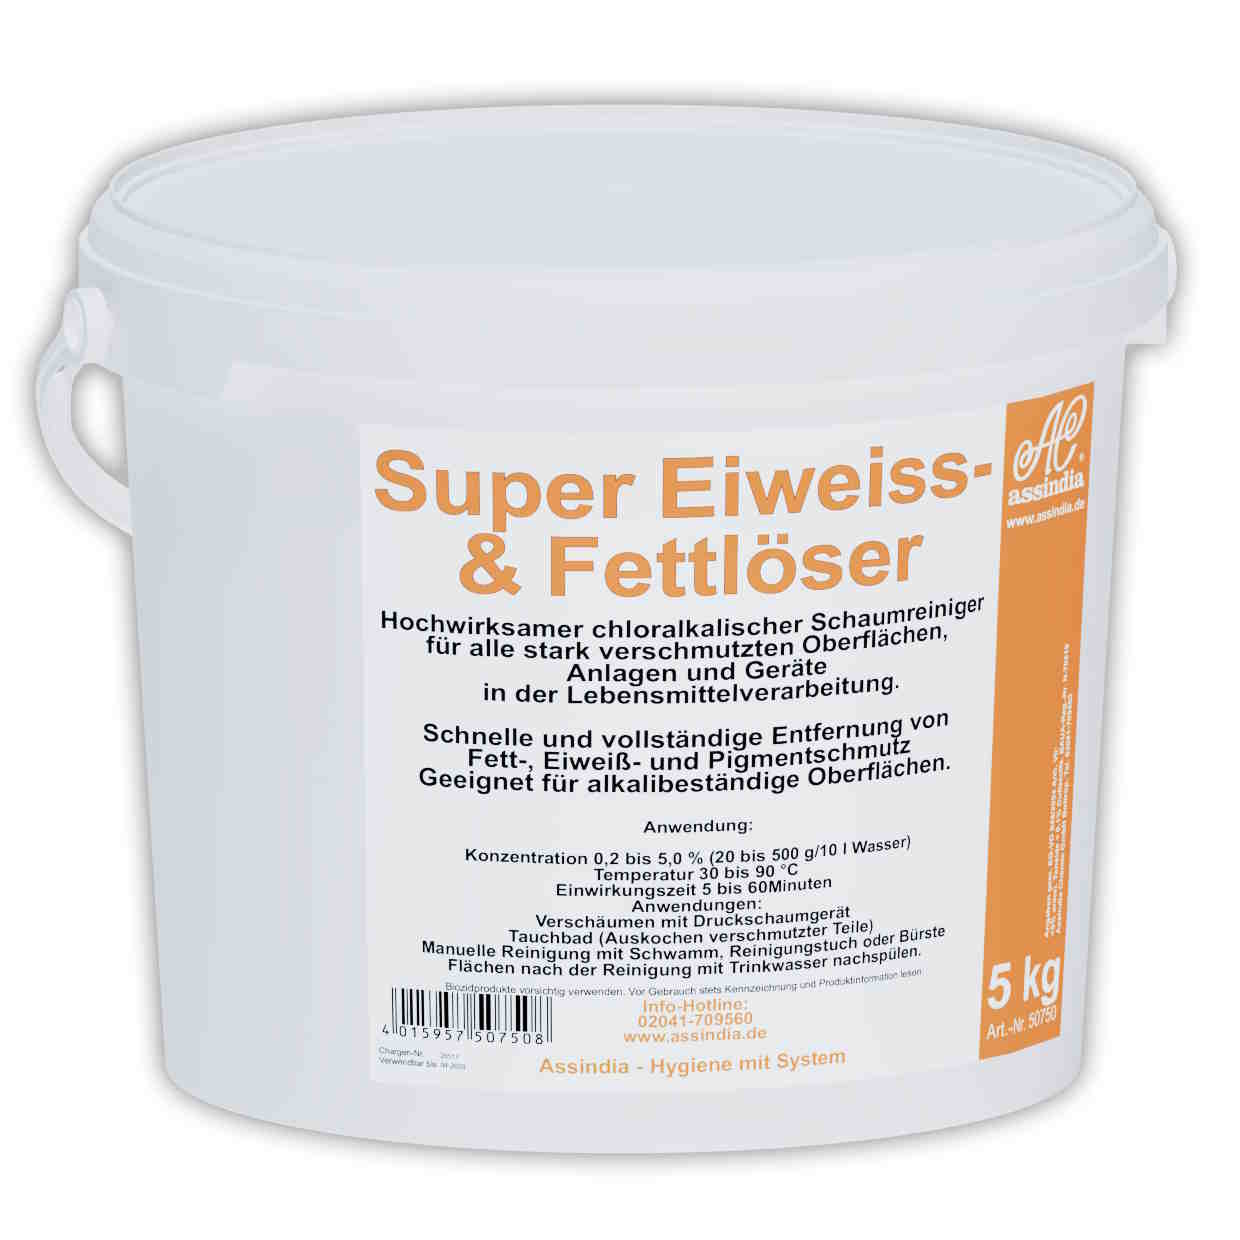  Super Eiweiß- & Fettlöser (alk. Schaumreiniger) 5 kg